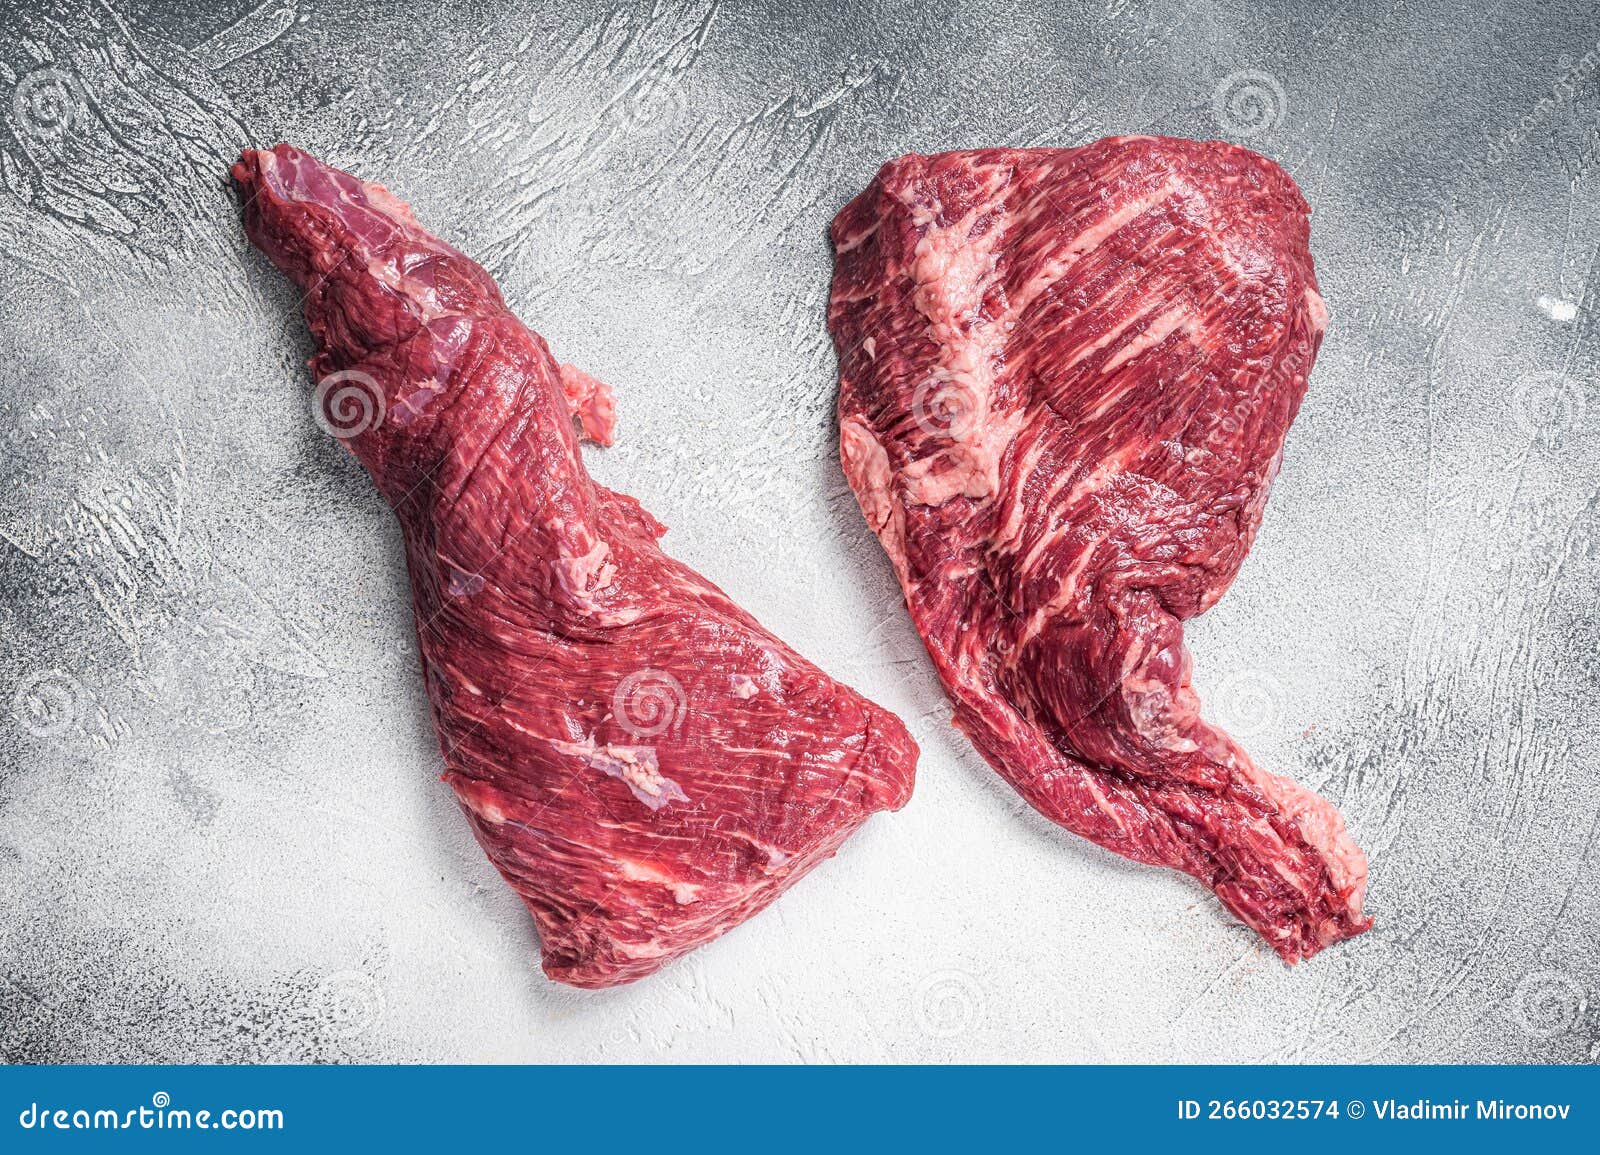 raw tri tip beef steak on kitchen table. white background. top view